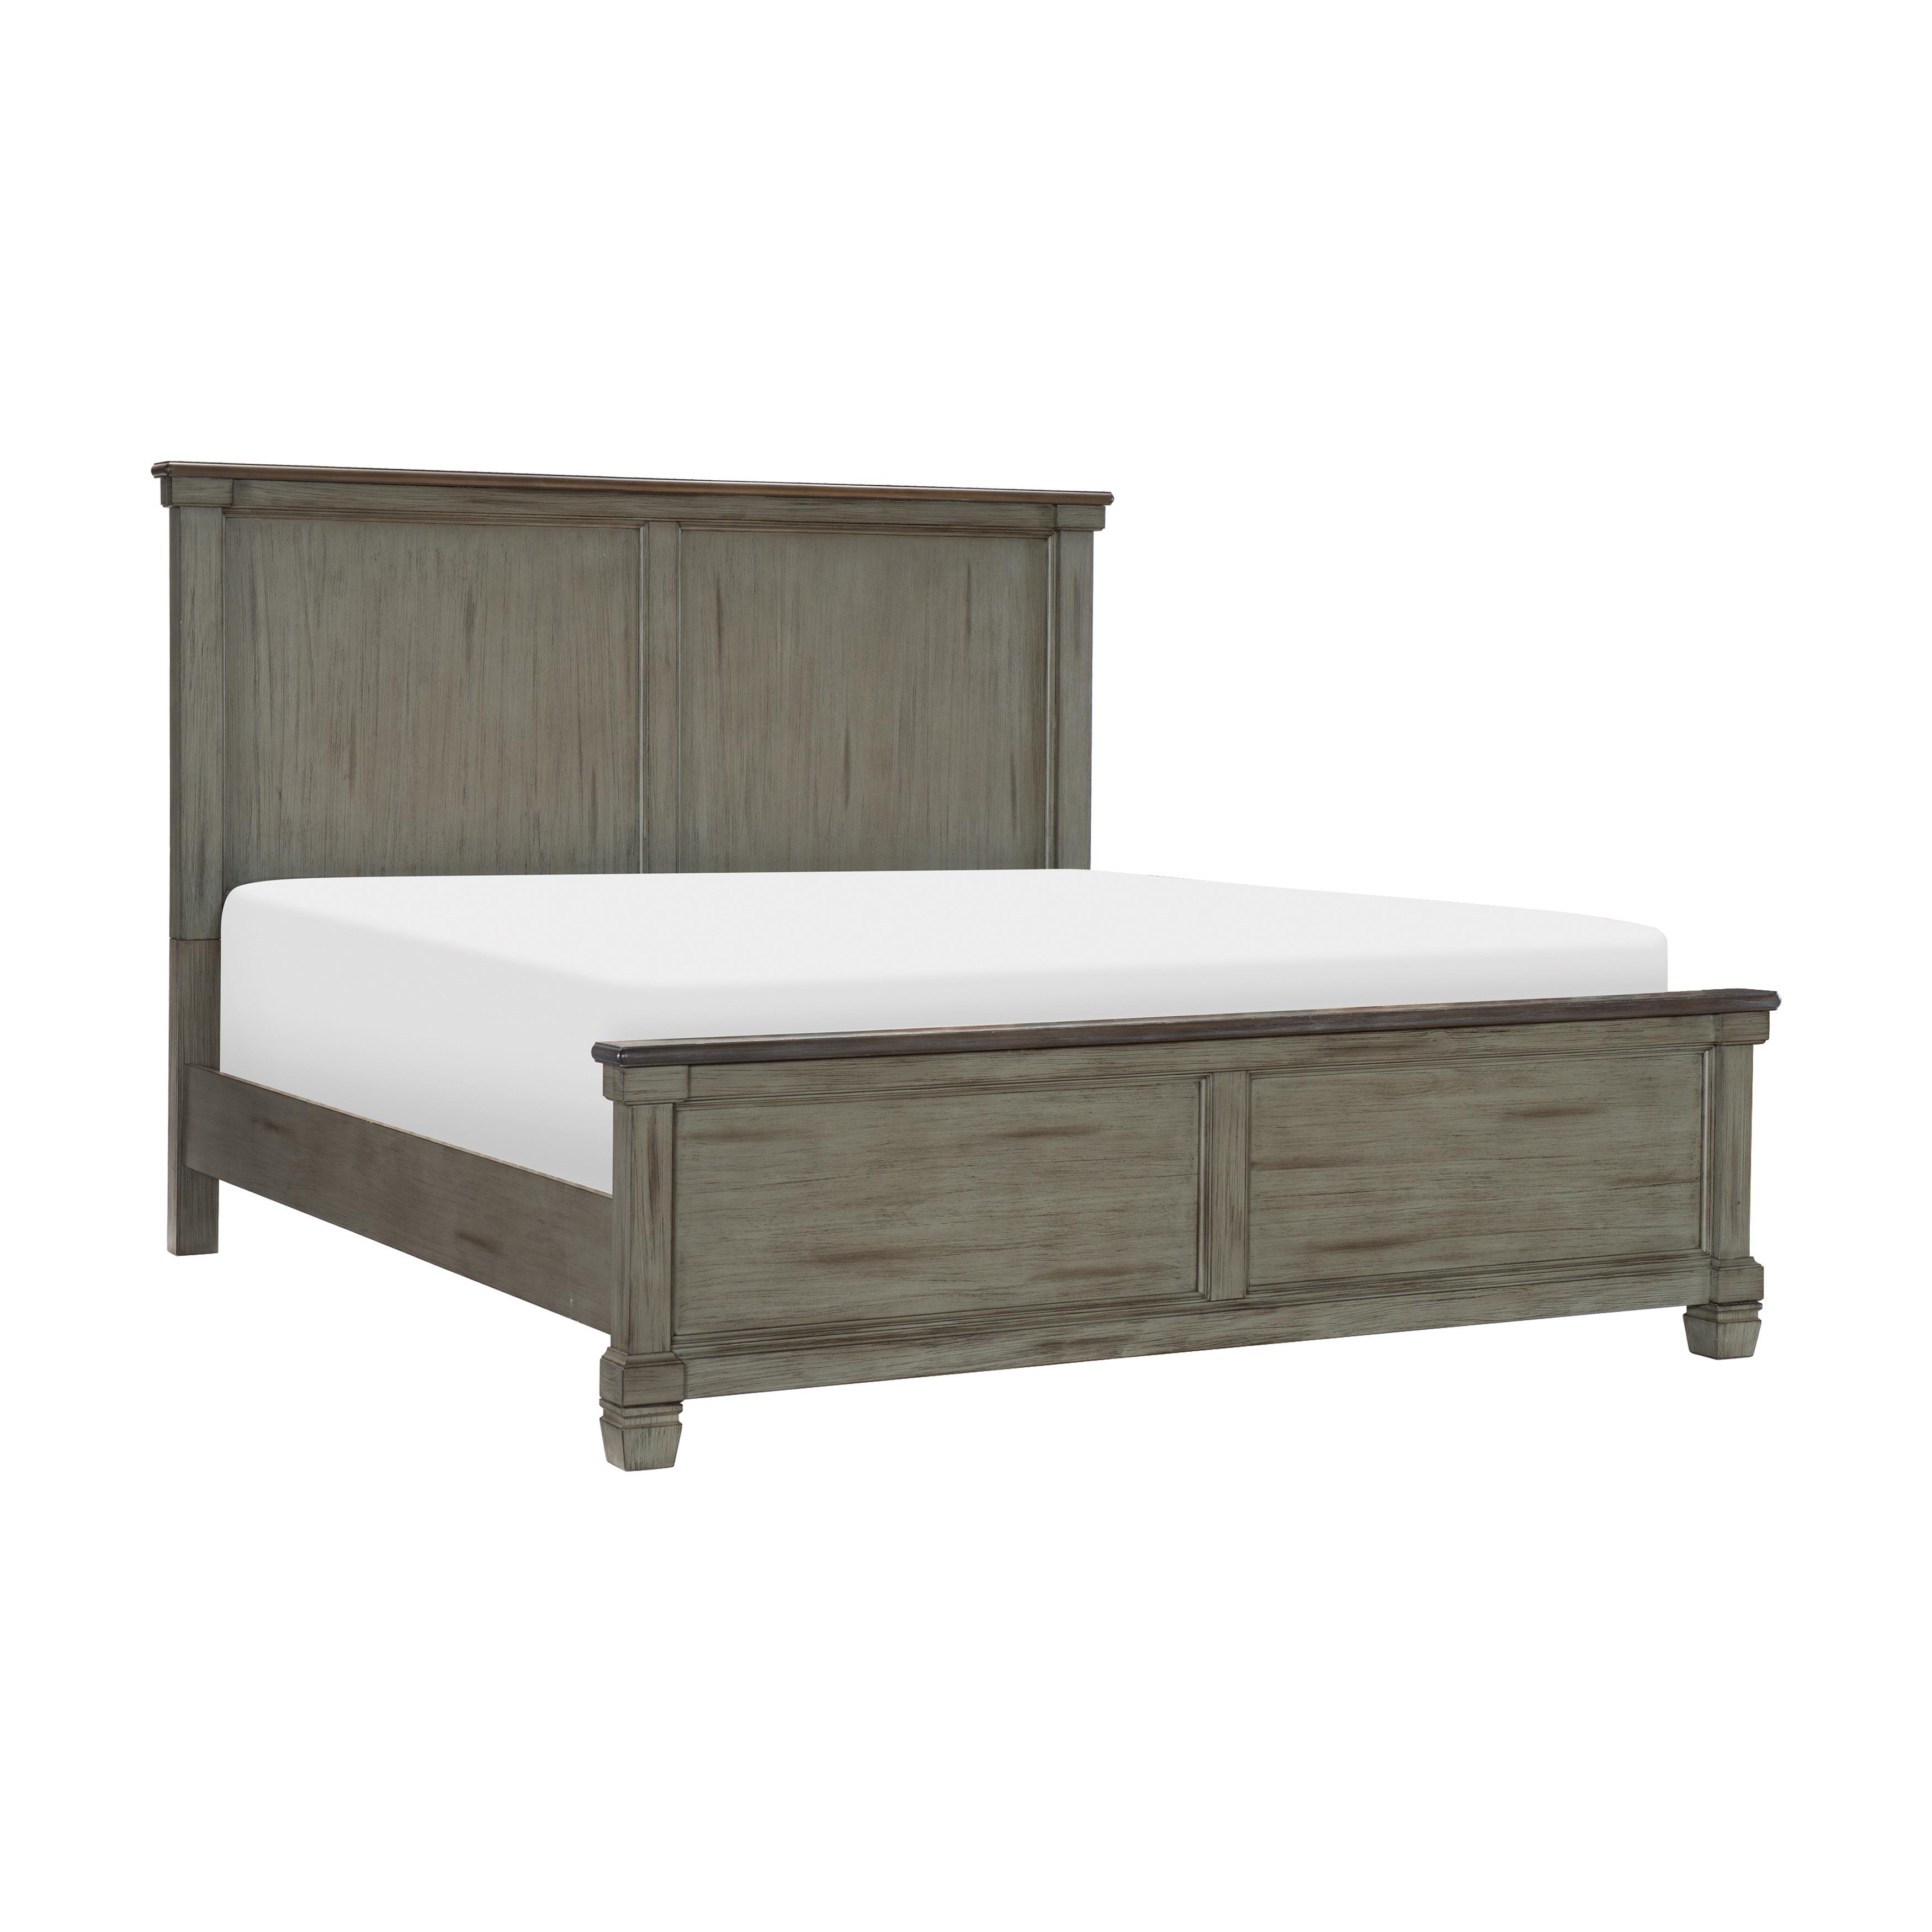 

    
Transitional Antique Gray & Coffee Wood CAL Bedroom Set 6pcs Homelegance 1626GYK-1CK* Weaver
